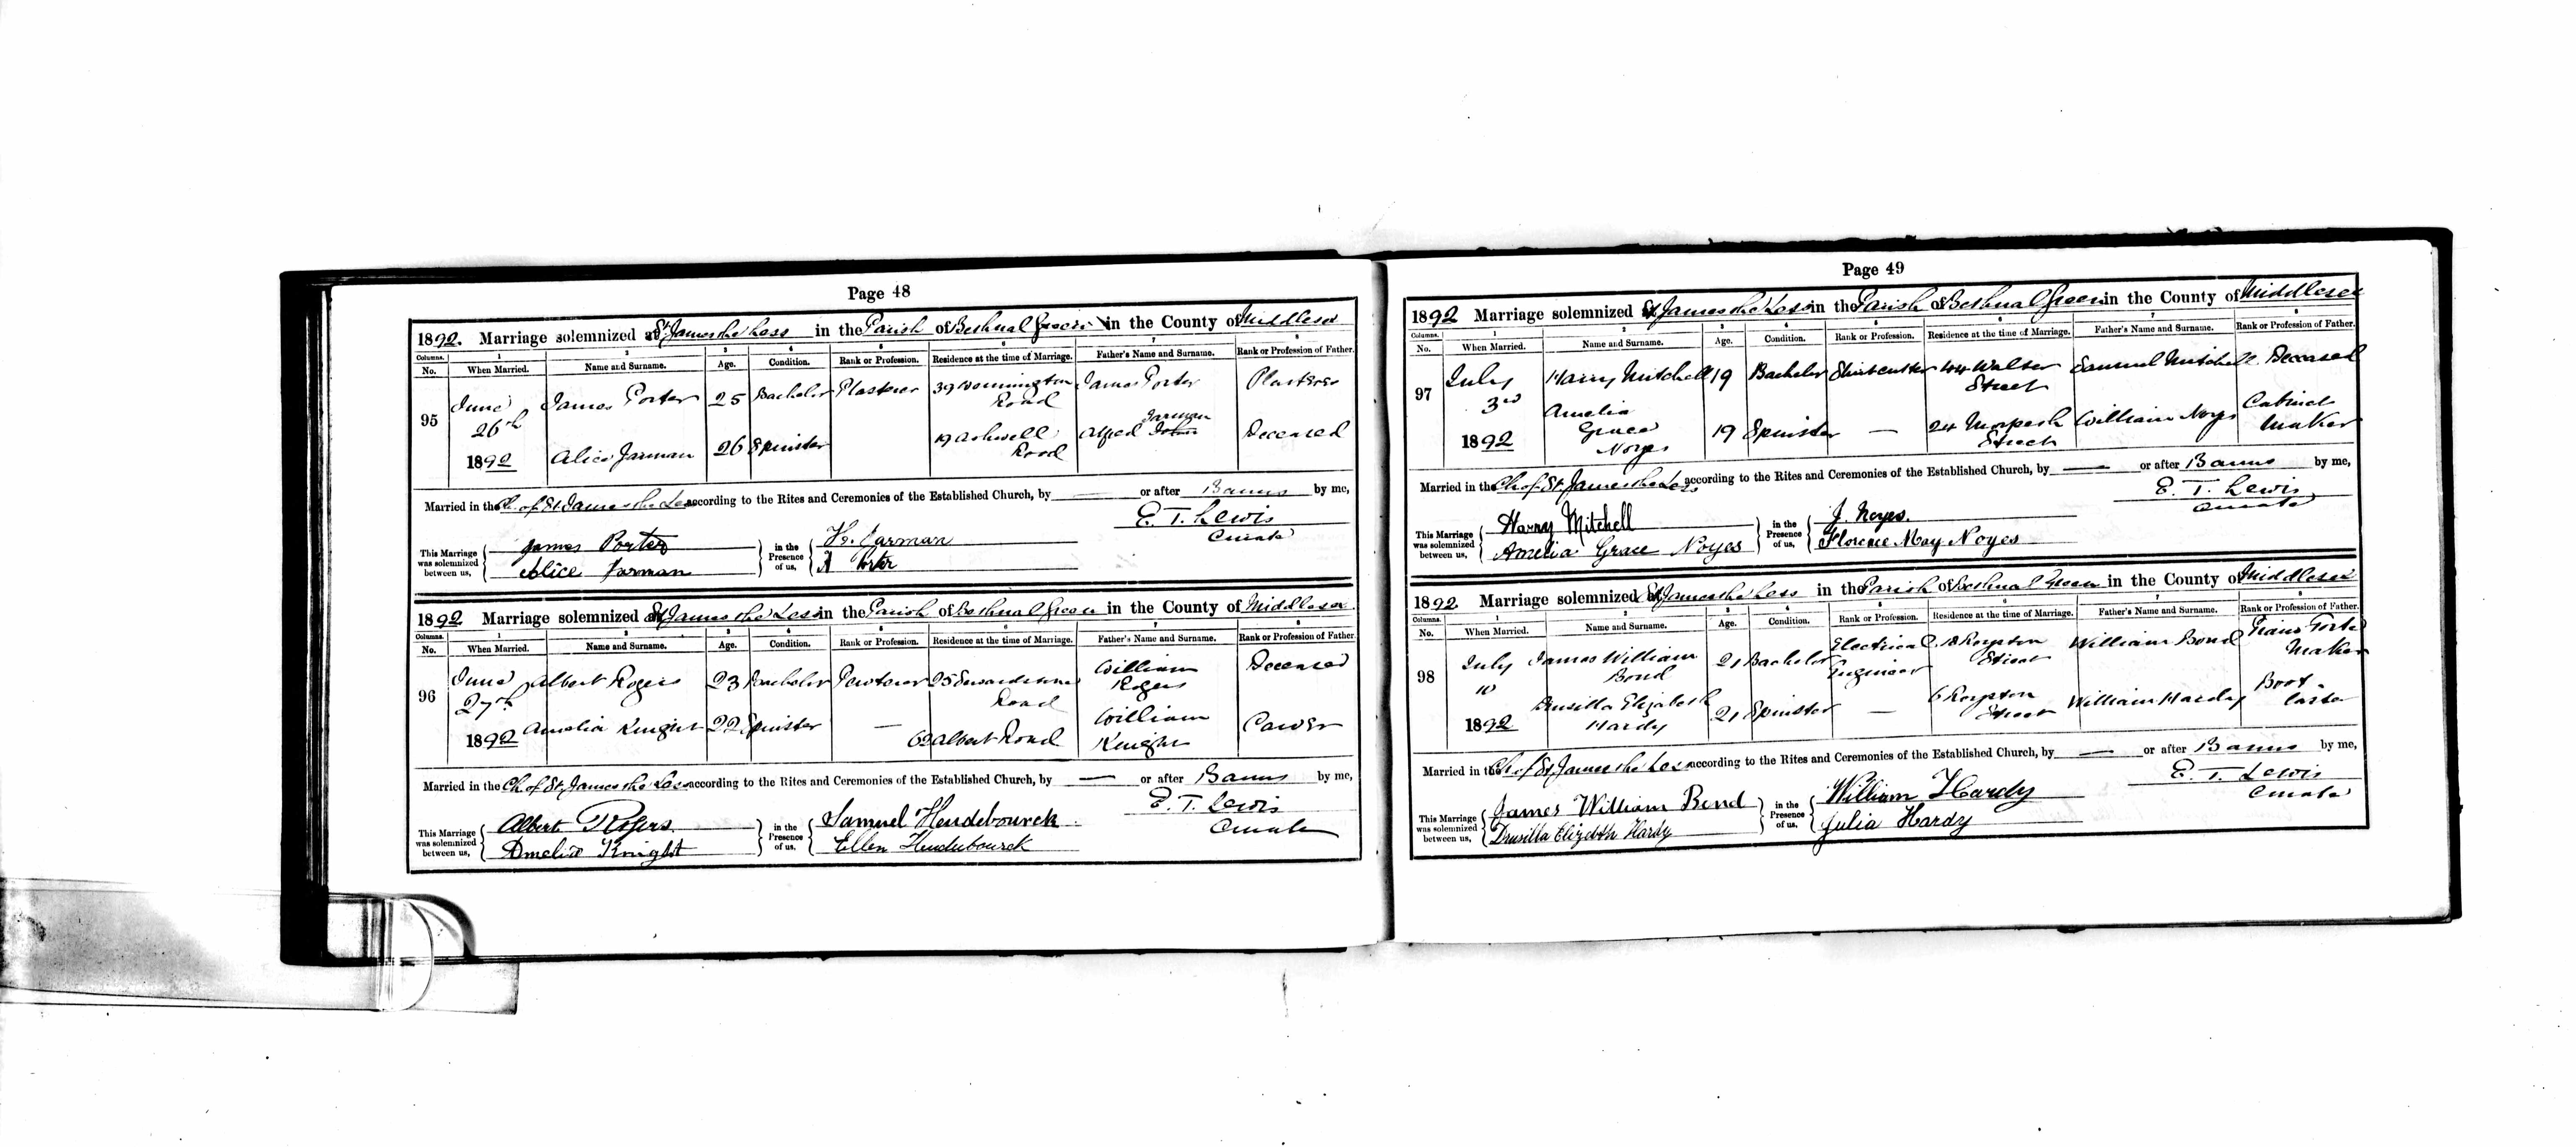 1892 marriage of Amelia Grace Noyes to Harry Mitchell